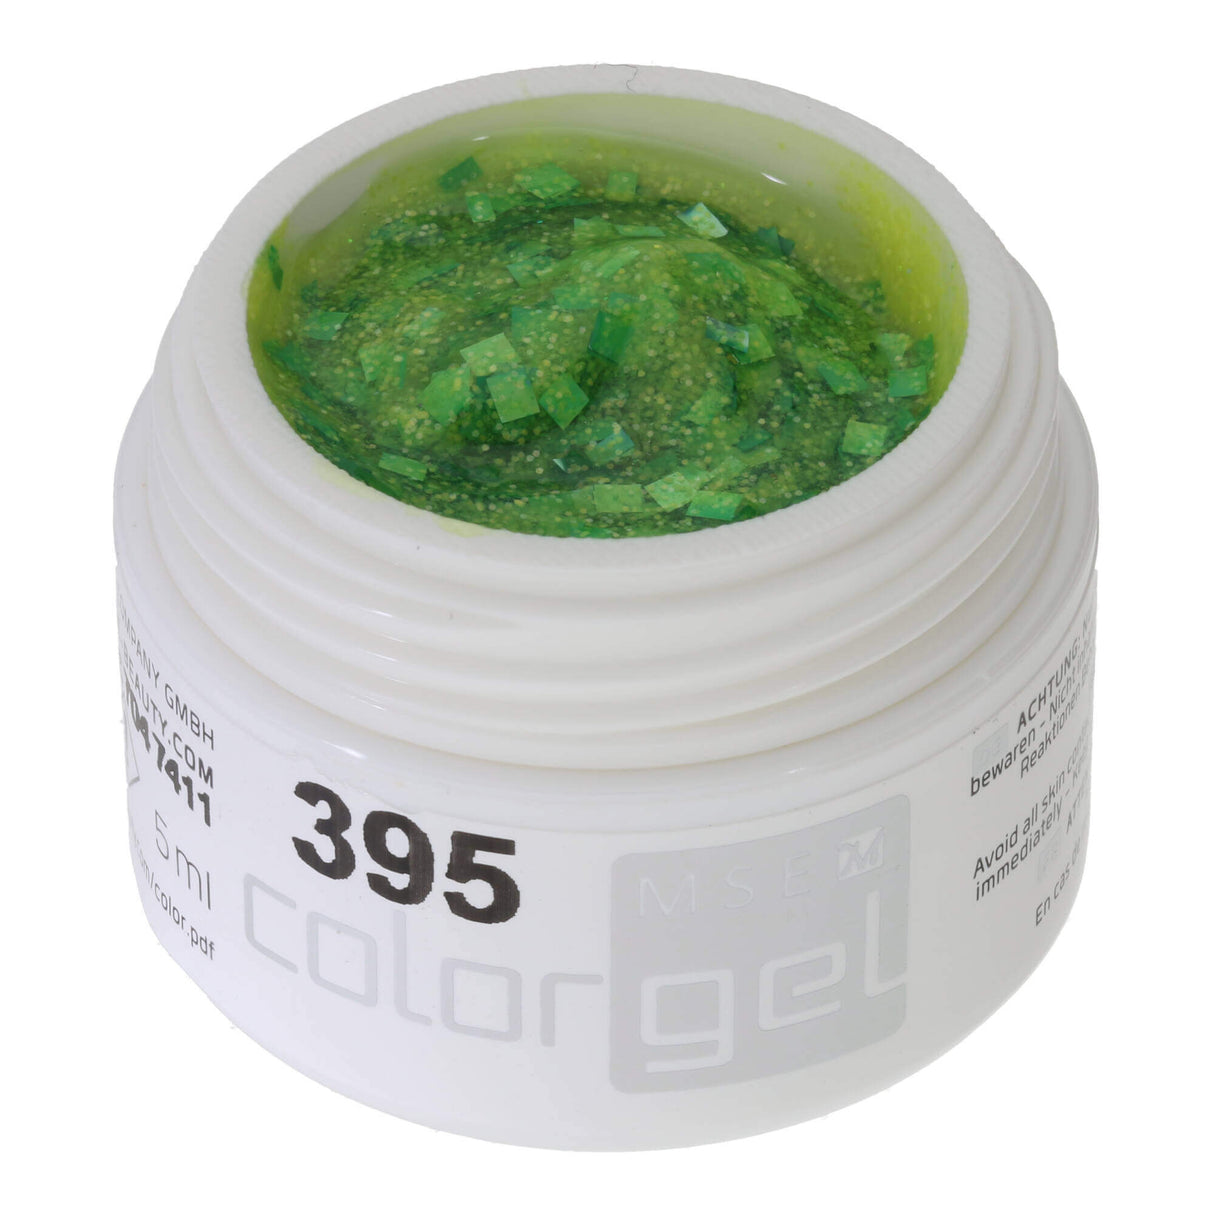 # 395 Premium-GLITTER Color Gel 5ml Jaune-vert intense avec des paillettes vert mai